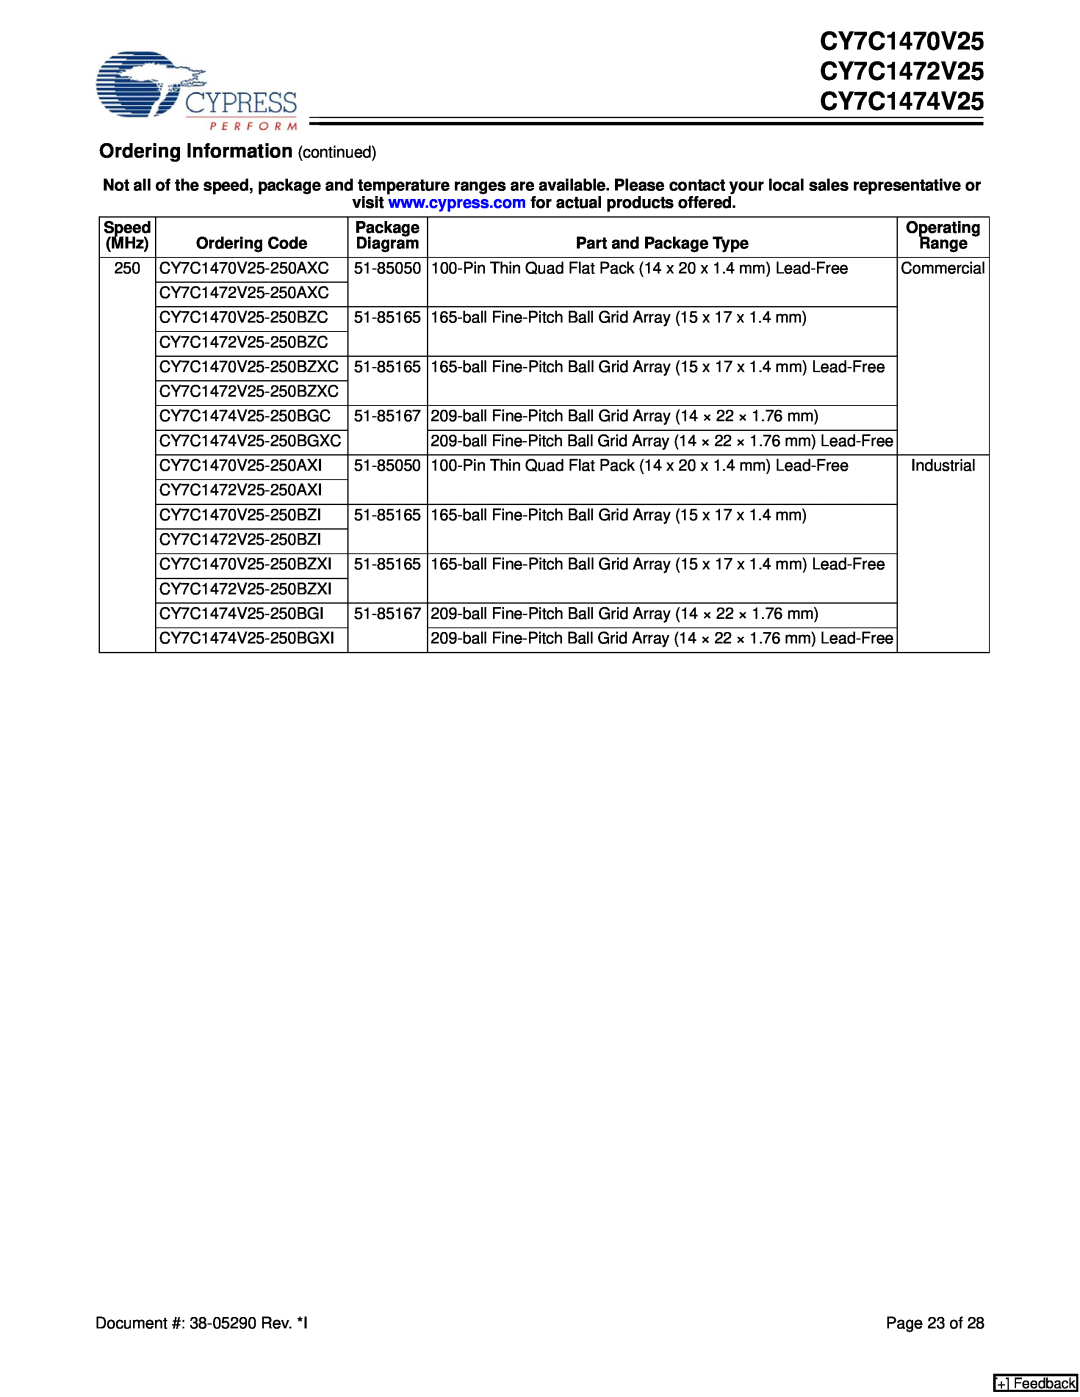 Cypress manual Ordering Information continued, CY7C1470V25 CY7C1472V25 CY7C1474V25 